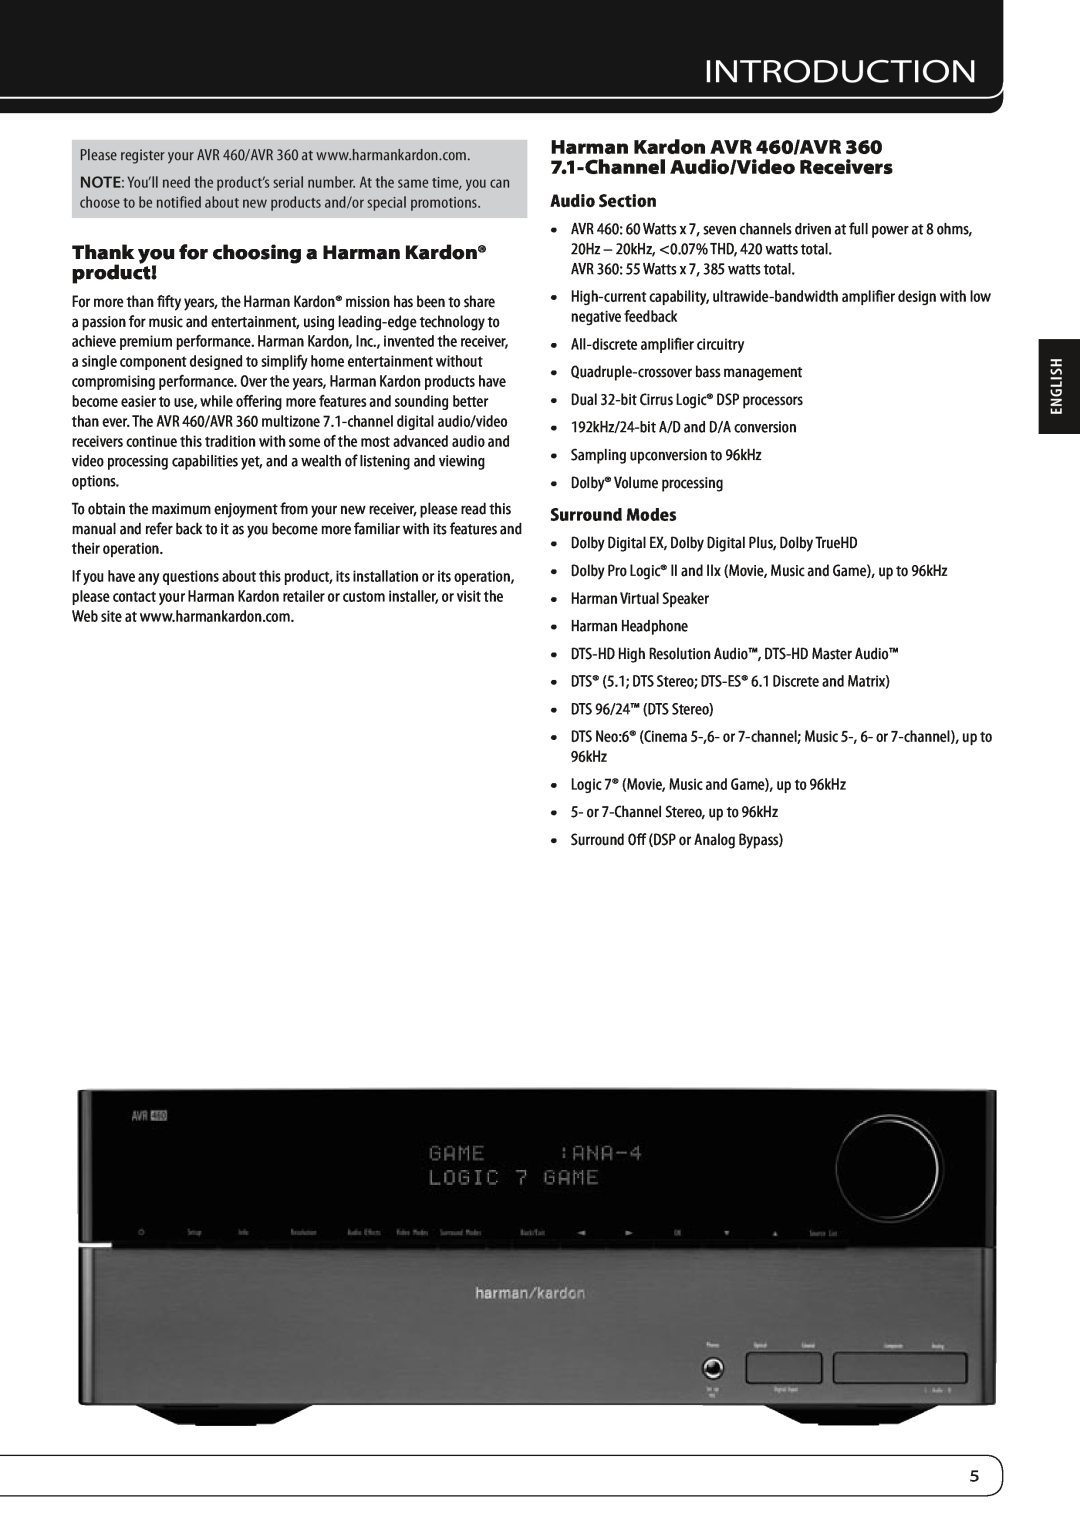 Harman-Kardon AVR360 owner manual Introduction, Thank you for choosing a Harman Kardon product, English 